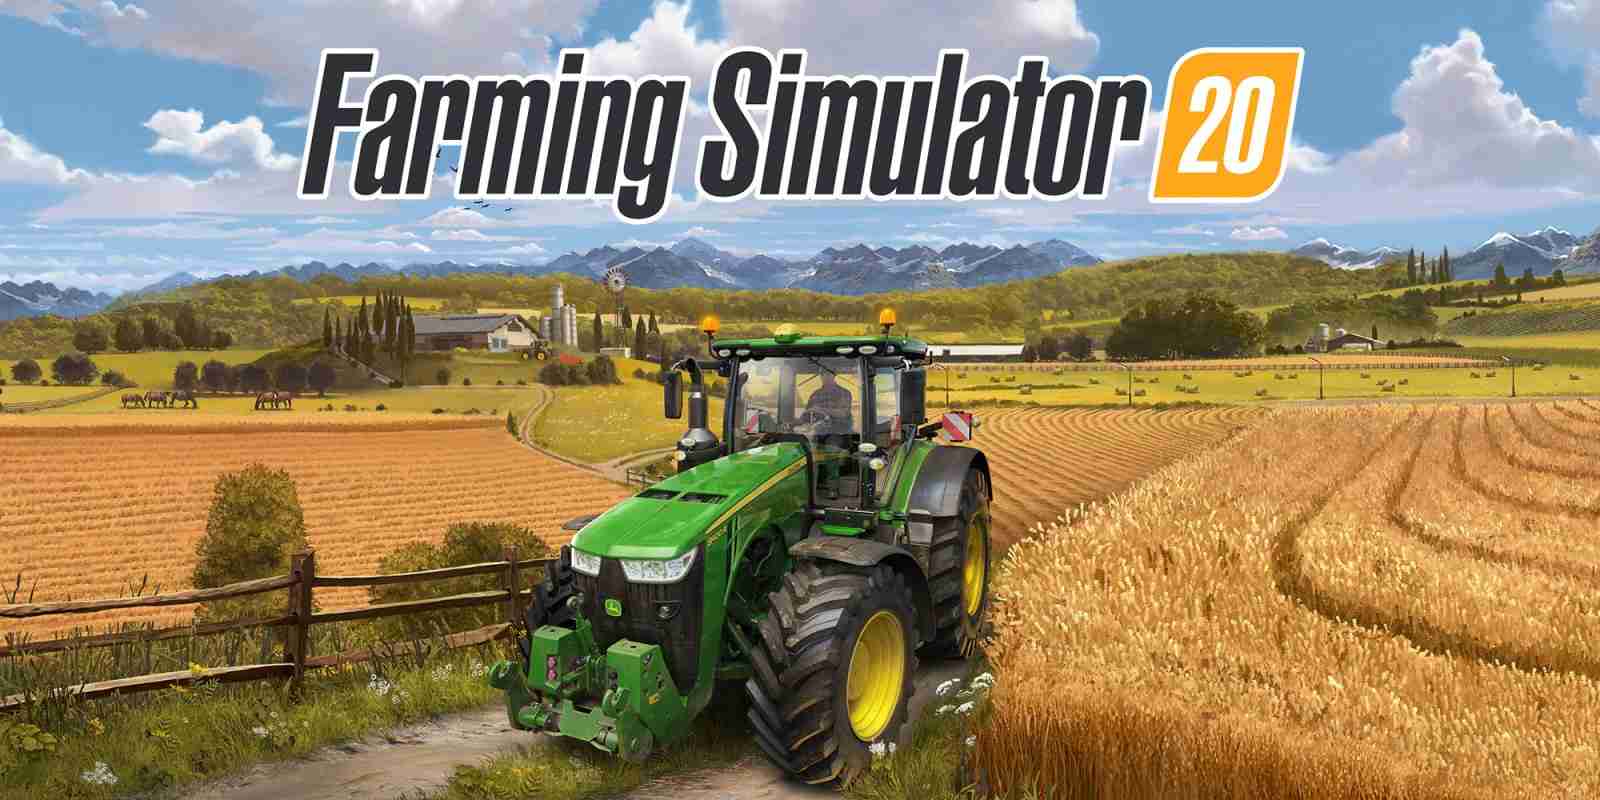 Hack Farming Simulator 20 MOD (Menu Pro, Tiền Full) APK 0.0.0.77 - Google